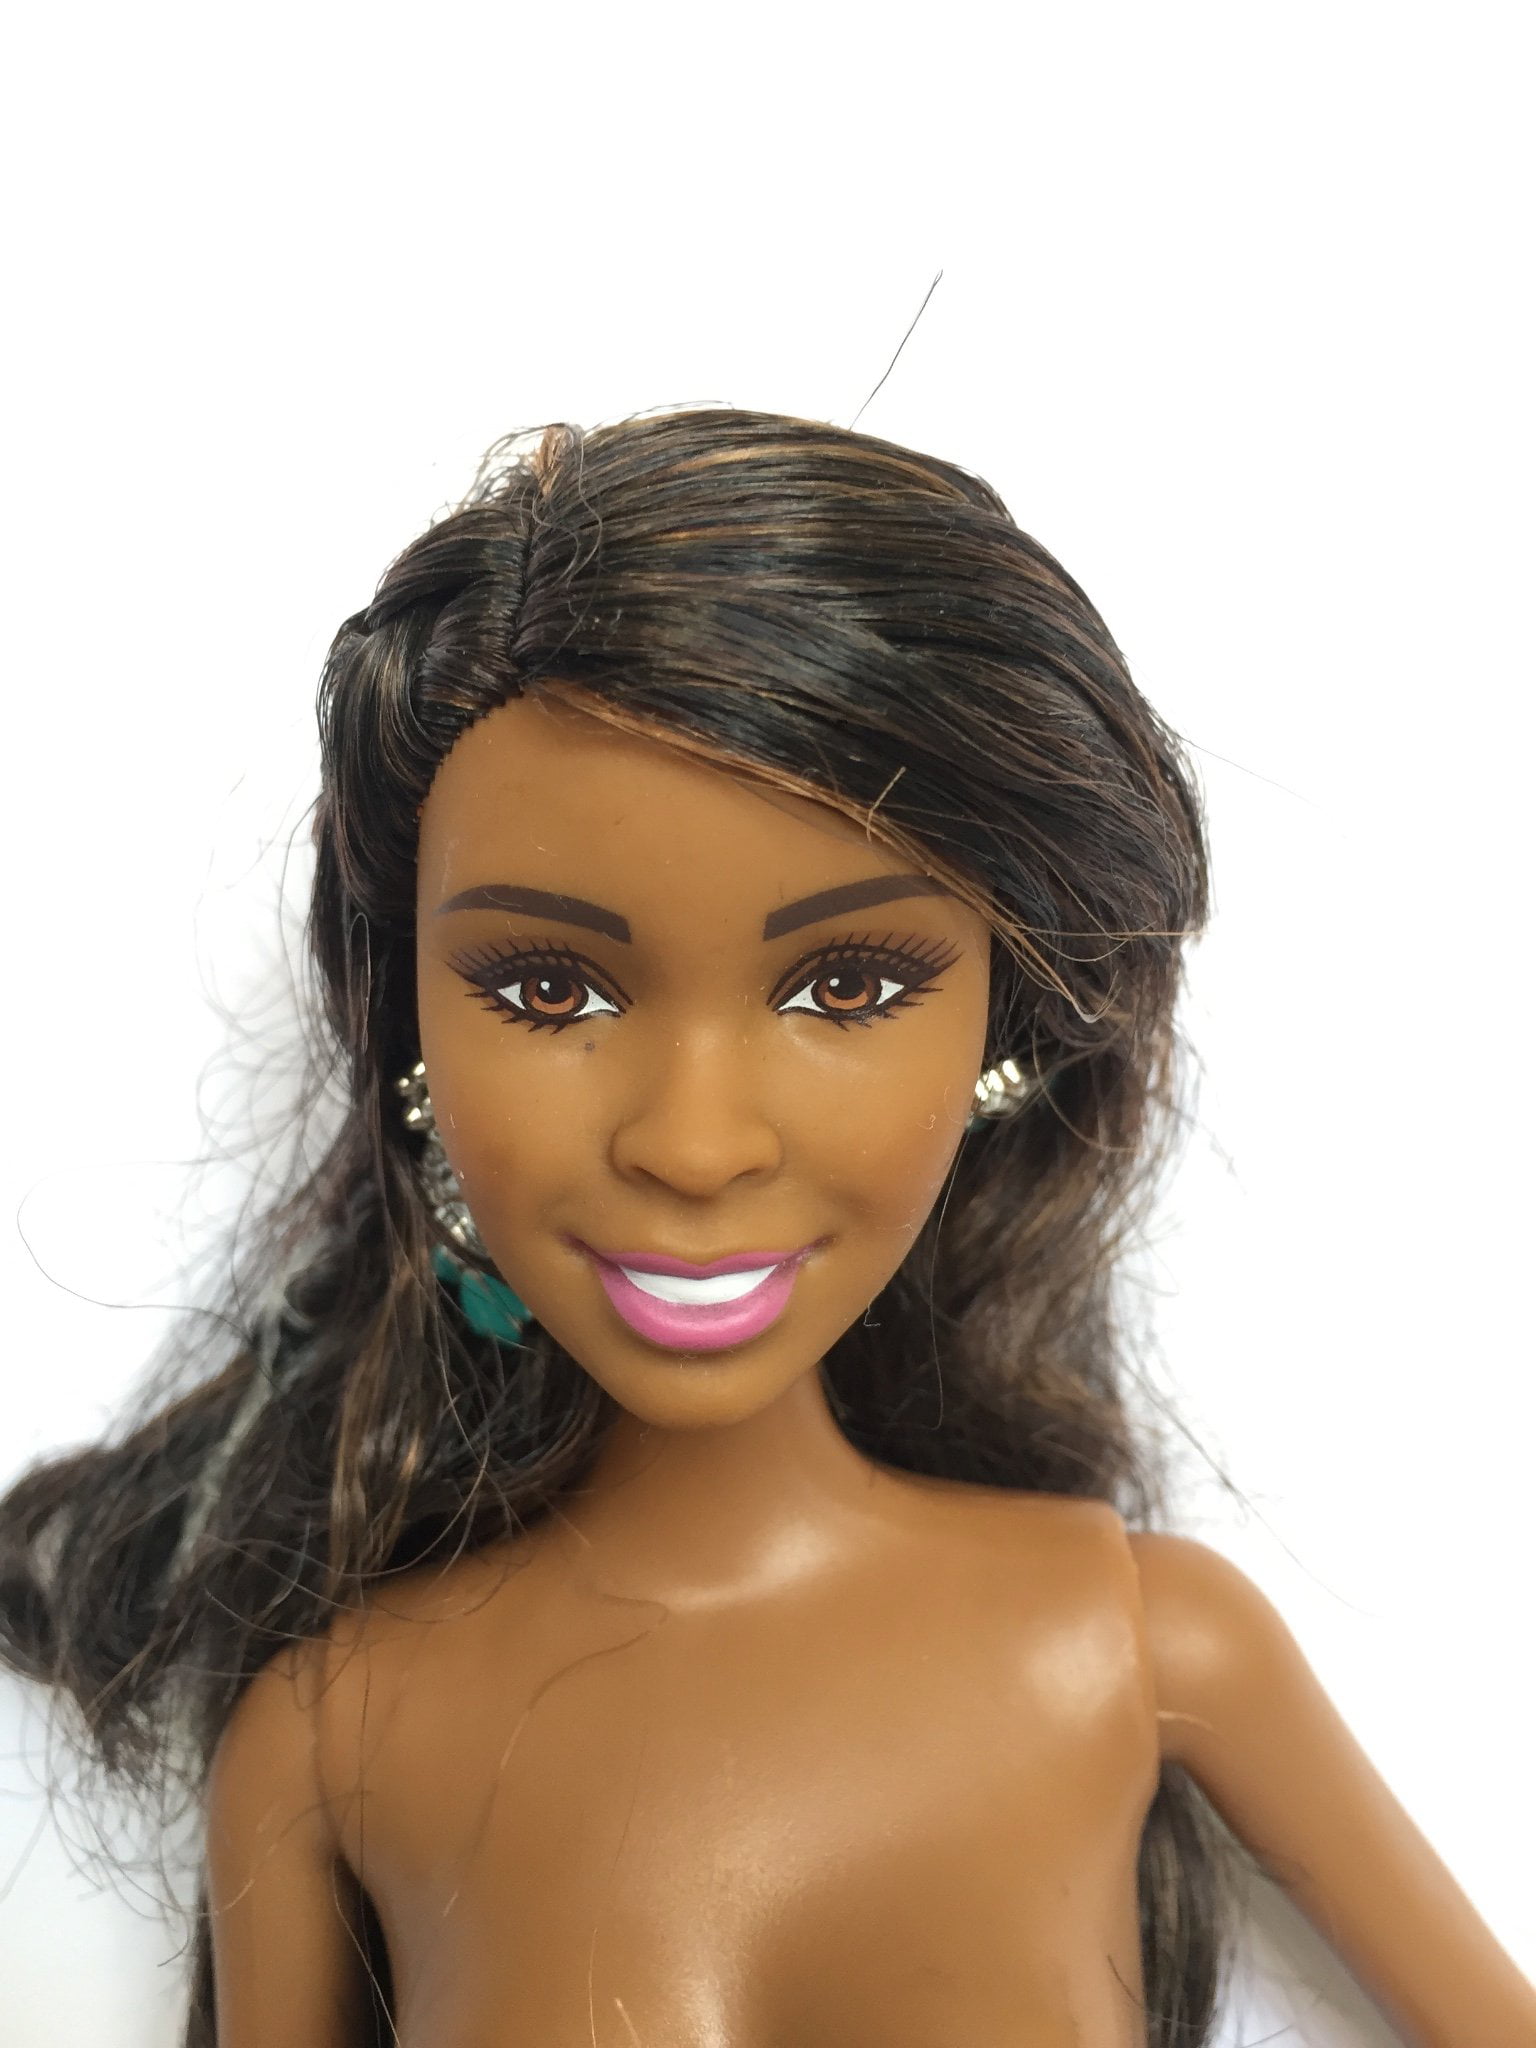 Tiny Black People Naked - Naked Barbie